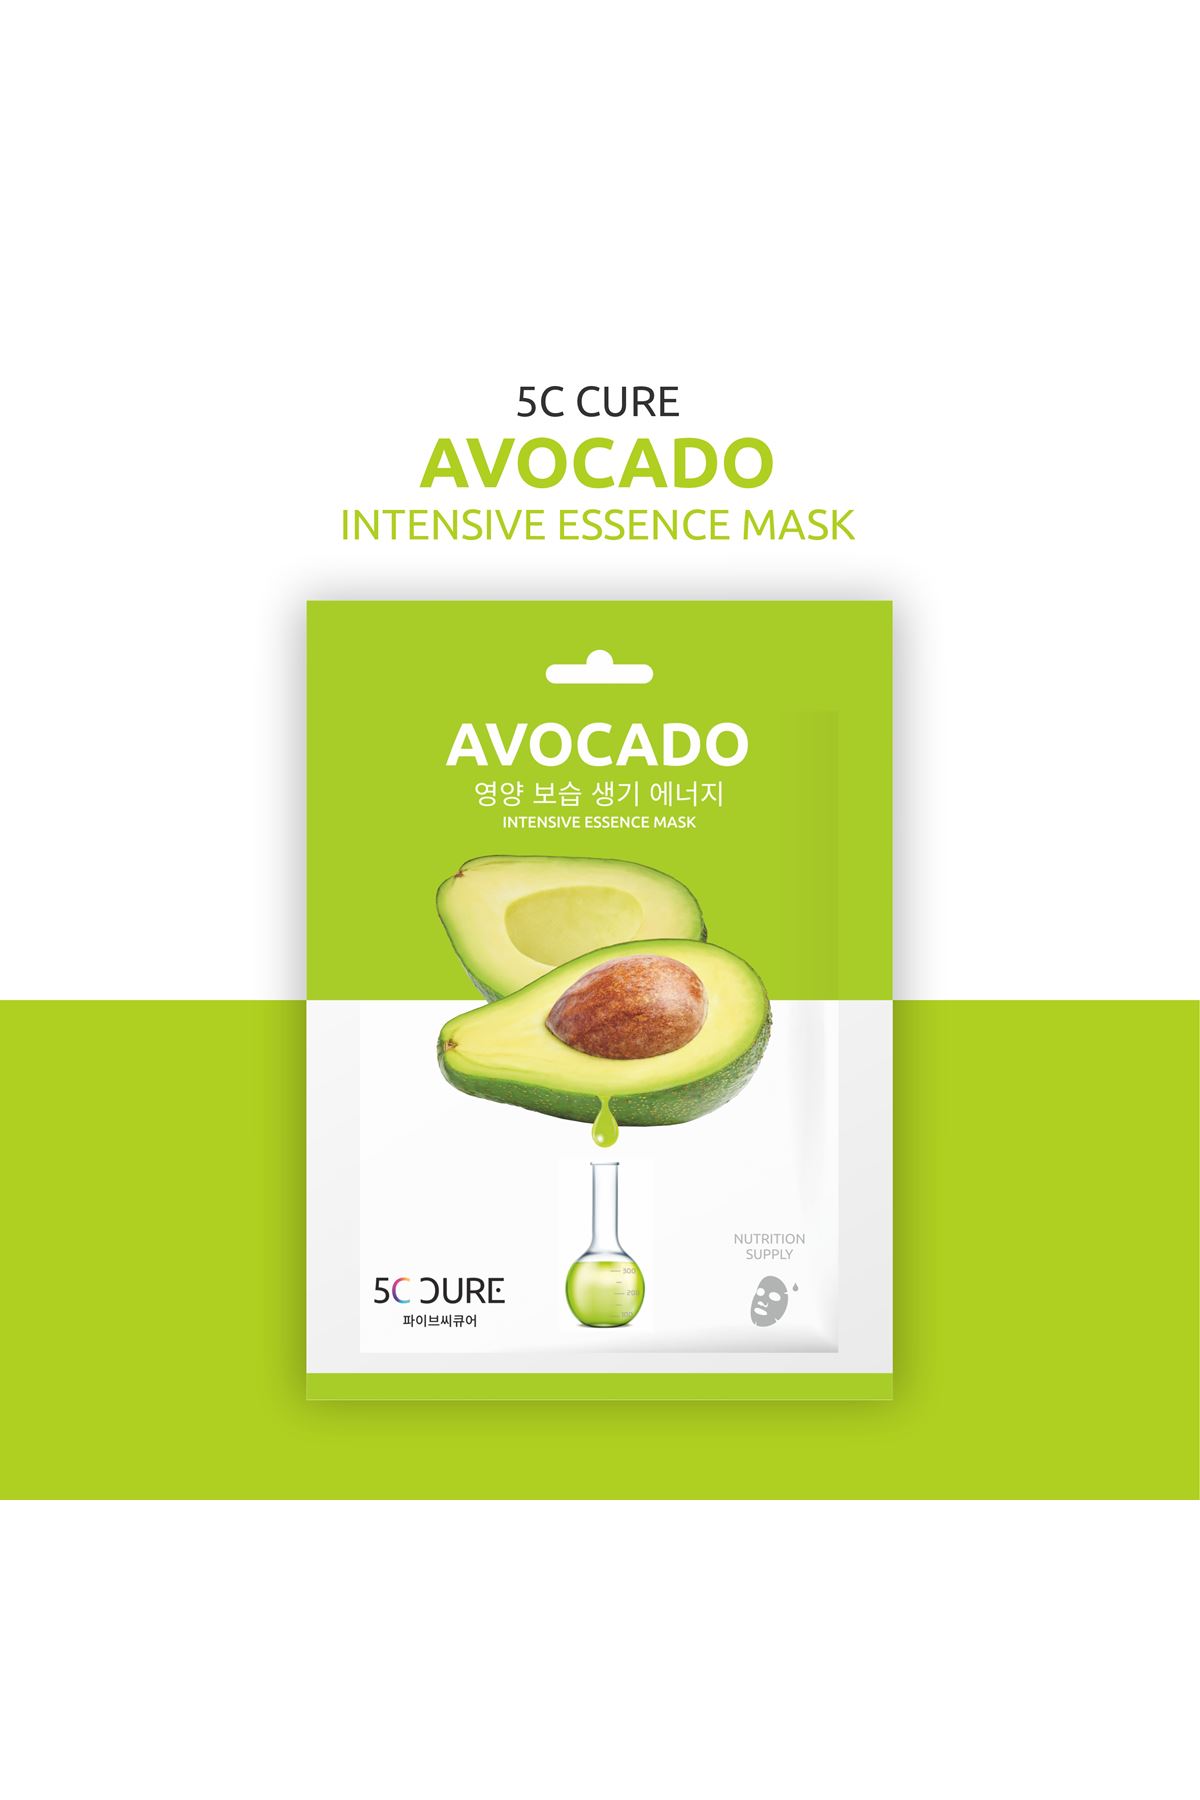 5c Cure Avocado Intensive Essence Mask